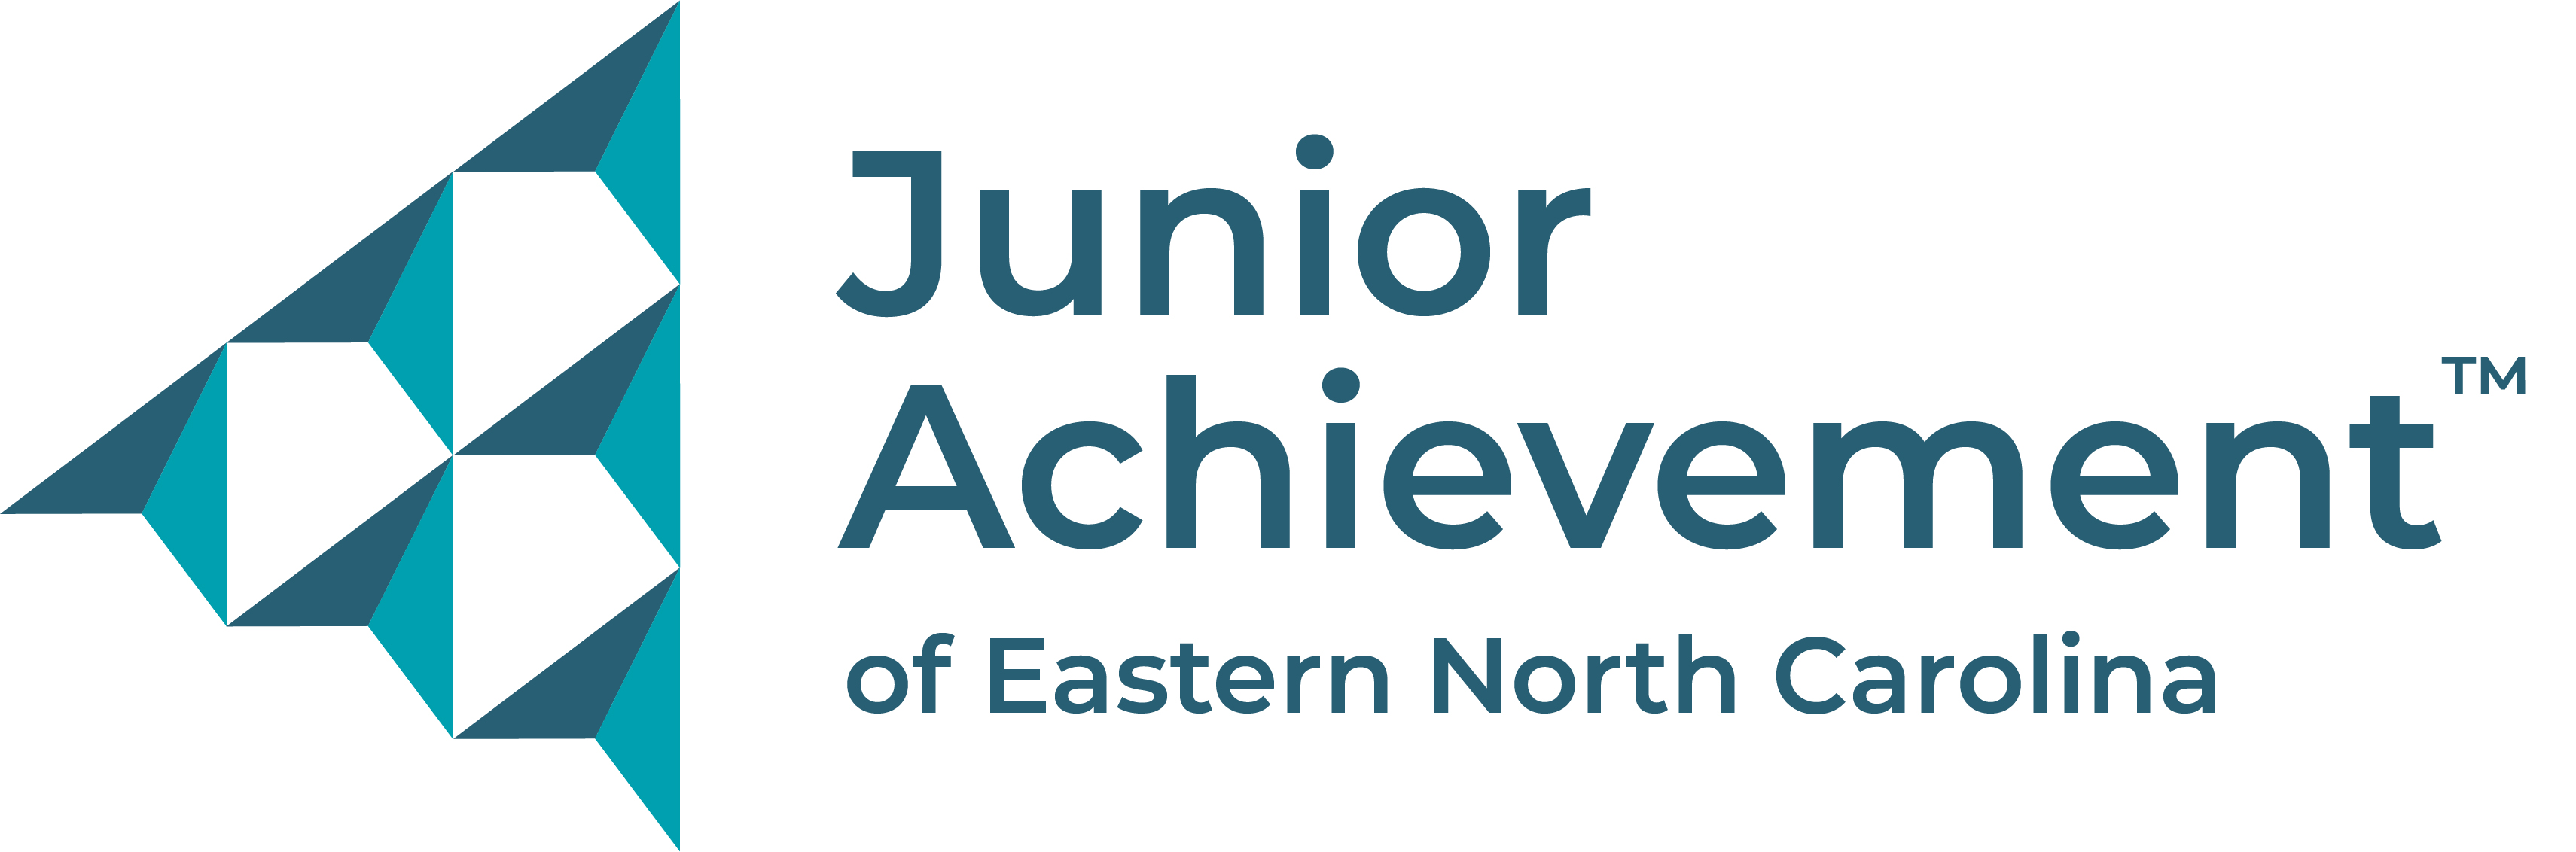 Junior Achievement of Eastern North Carolina, Inc.